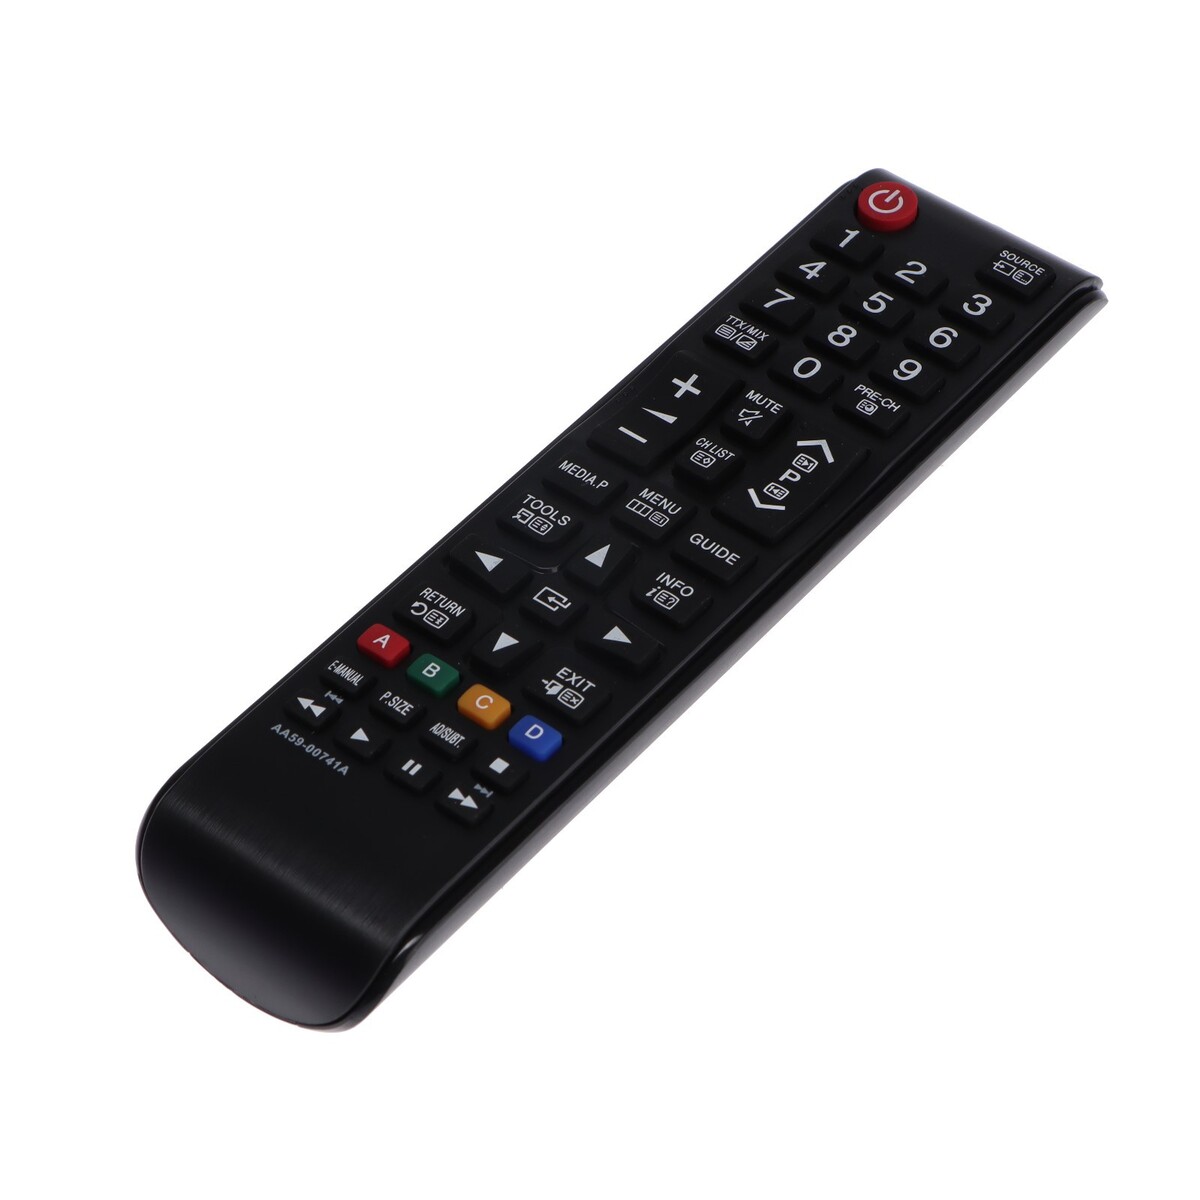 Пульт ду samsung lcd aa59-00741a, универсальный, черный aa59 00817a tv remote control replace for samsung smart tv bn59 01199f aa59 00666a aa59 00600a bn59 01180a remote controller